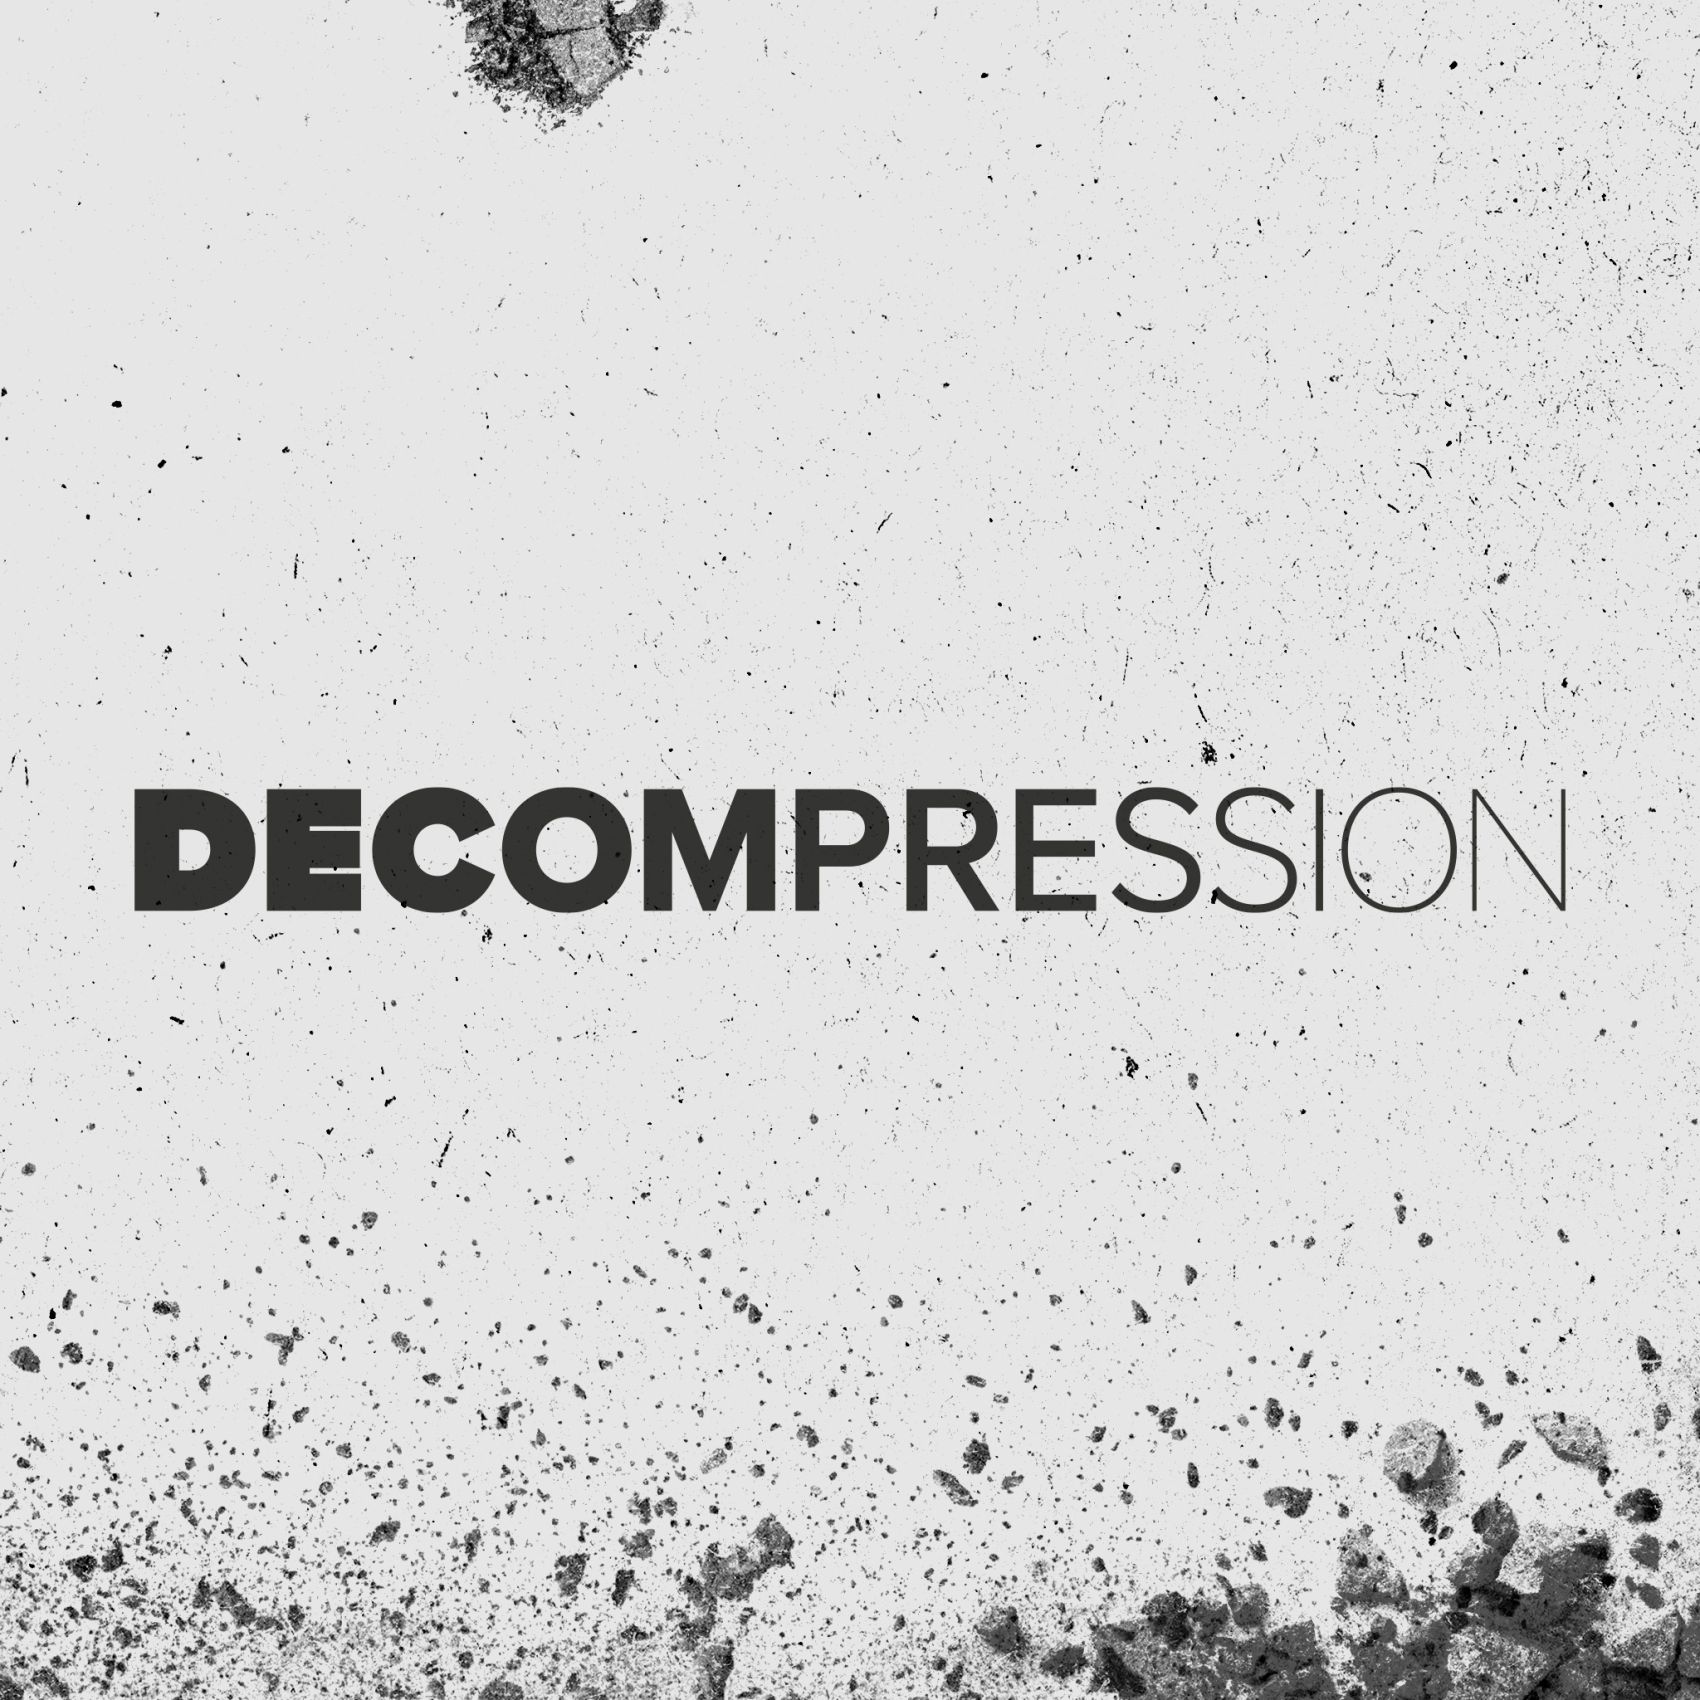 Visual identity design for the documentary film "Decompression" by Giorgos Pavloudis